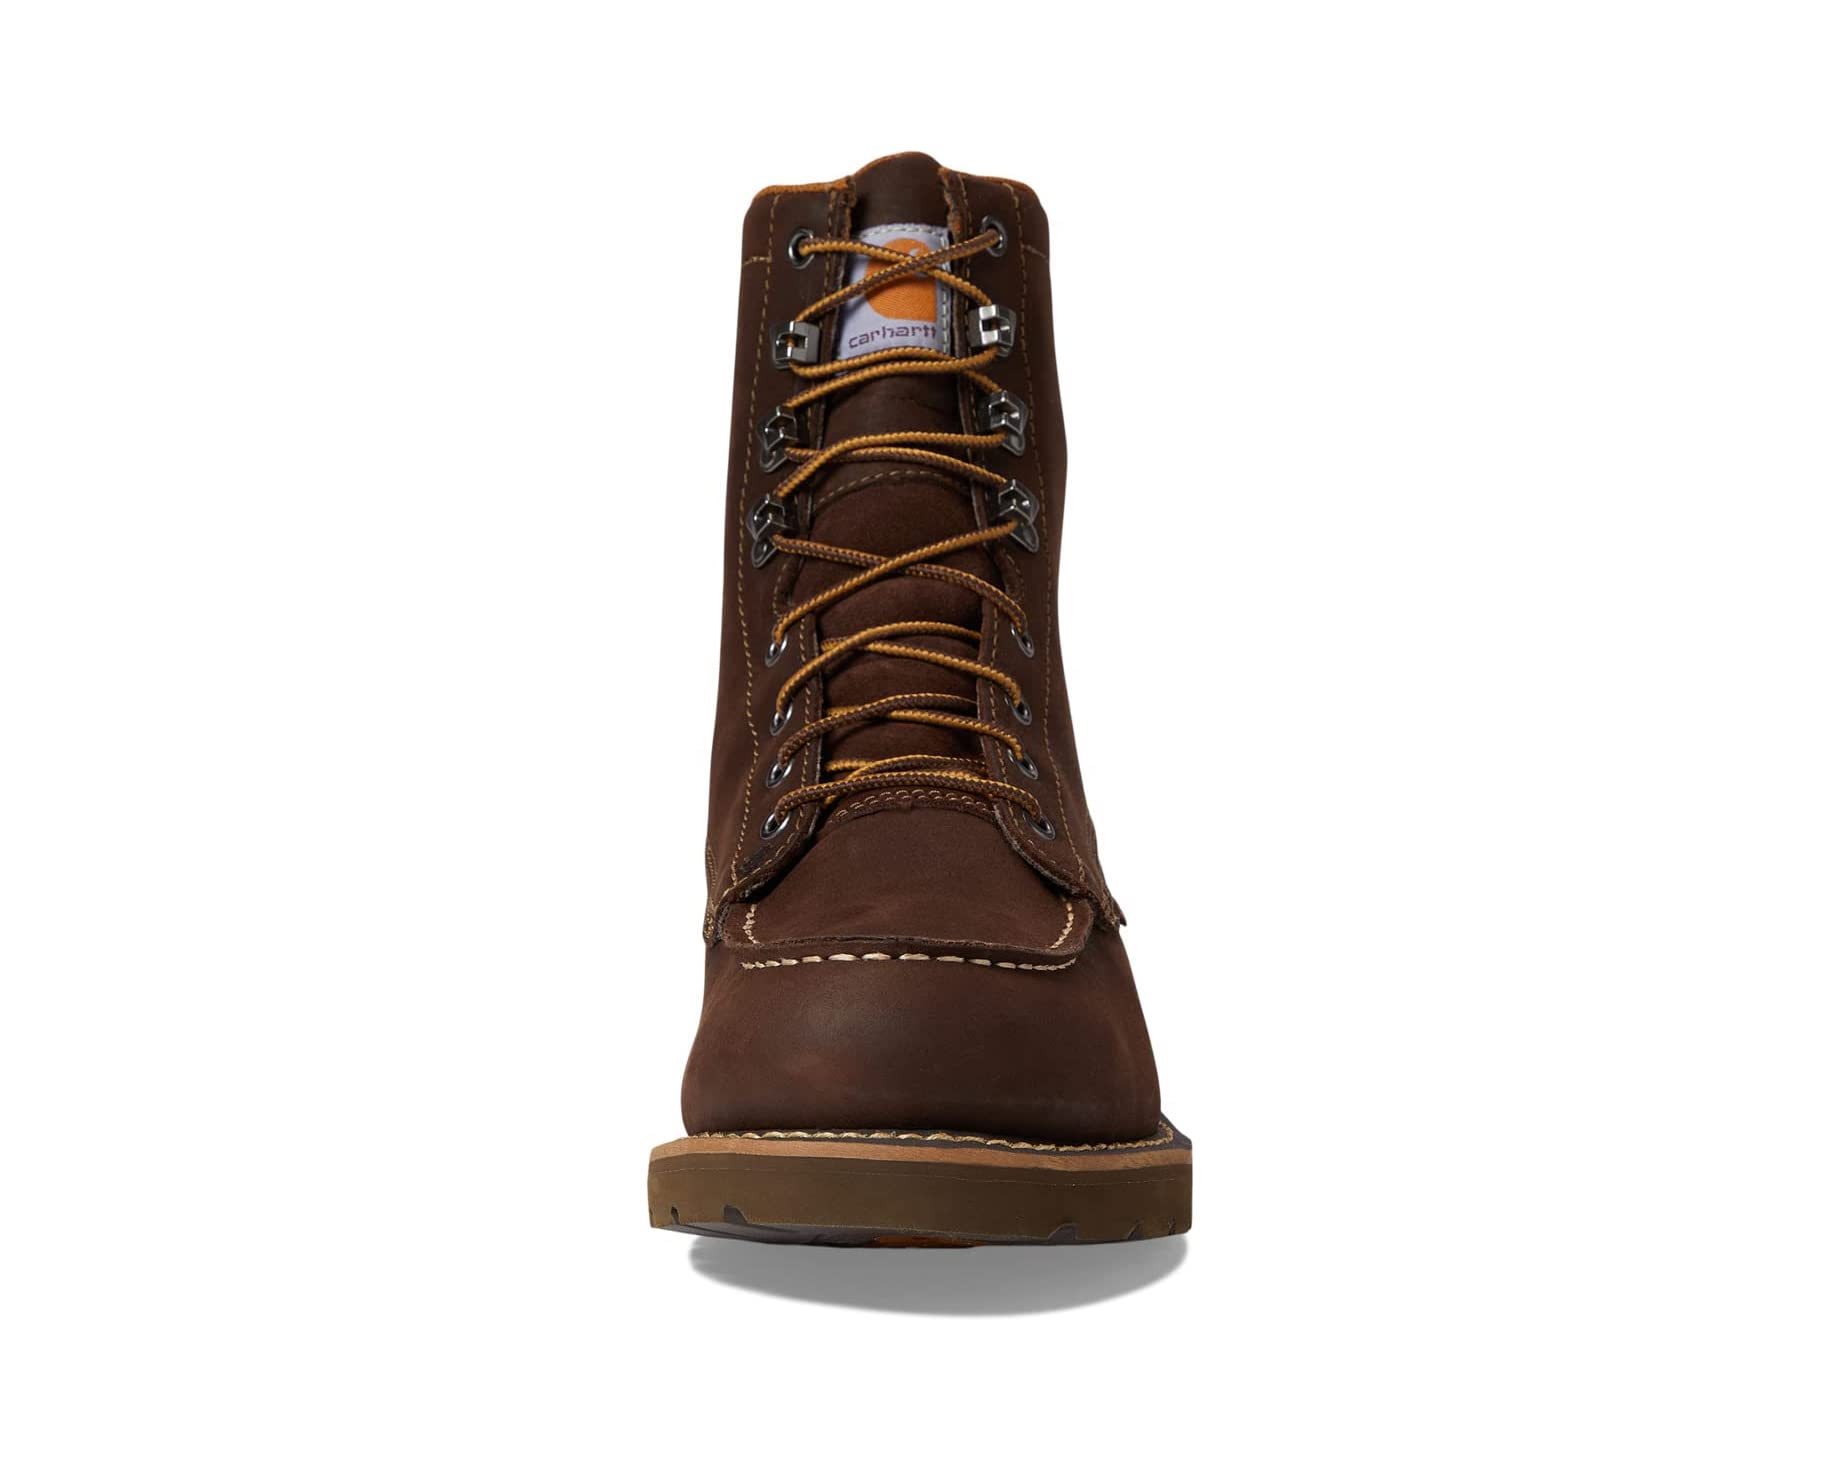 Ботинки Waterproof 8 Moc Soft Toe Wedge Boot Carhartt, коричневый ботинки carhartt soft toe водонепроницаемые на танкетке коричневый